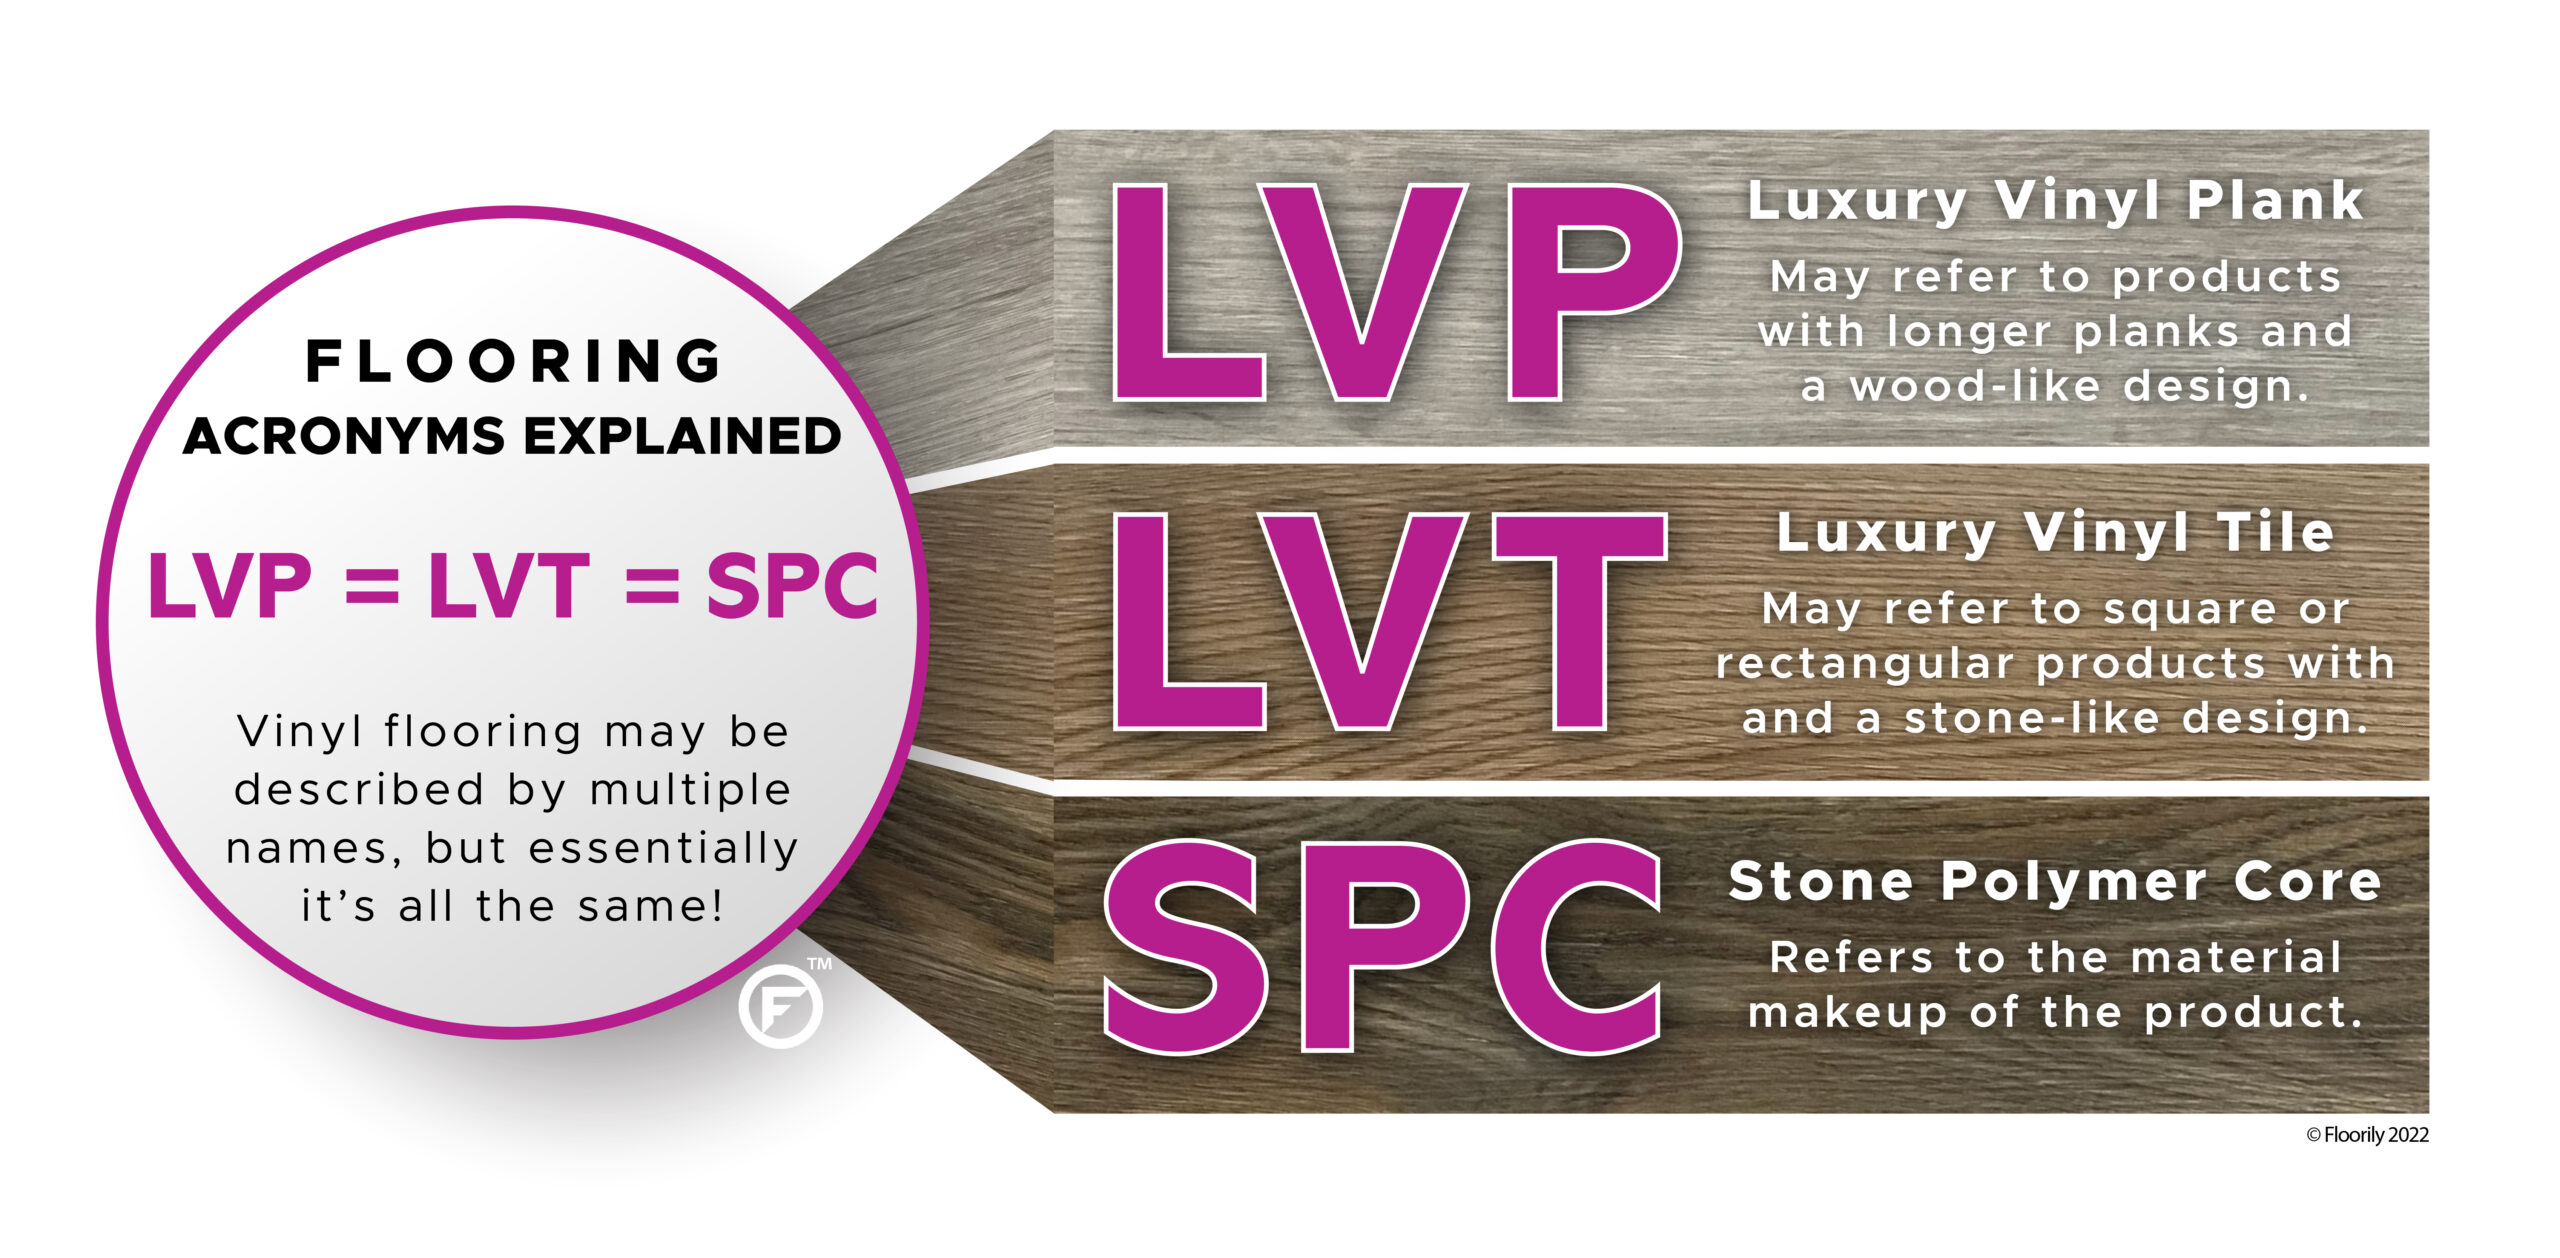 Flooring Acronyms Explained: Luxury Vinyl Plank (LVP), Luxury Vinyl Tile (LVT), Stone Polymer Core (SPC)